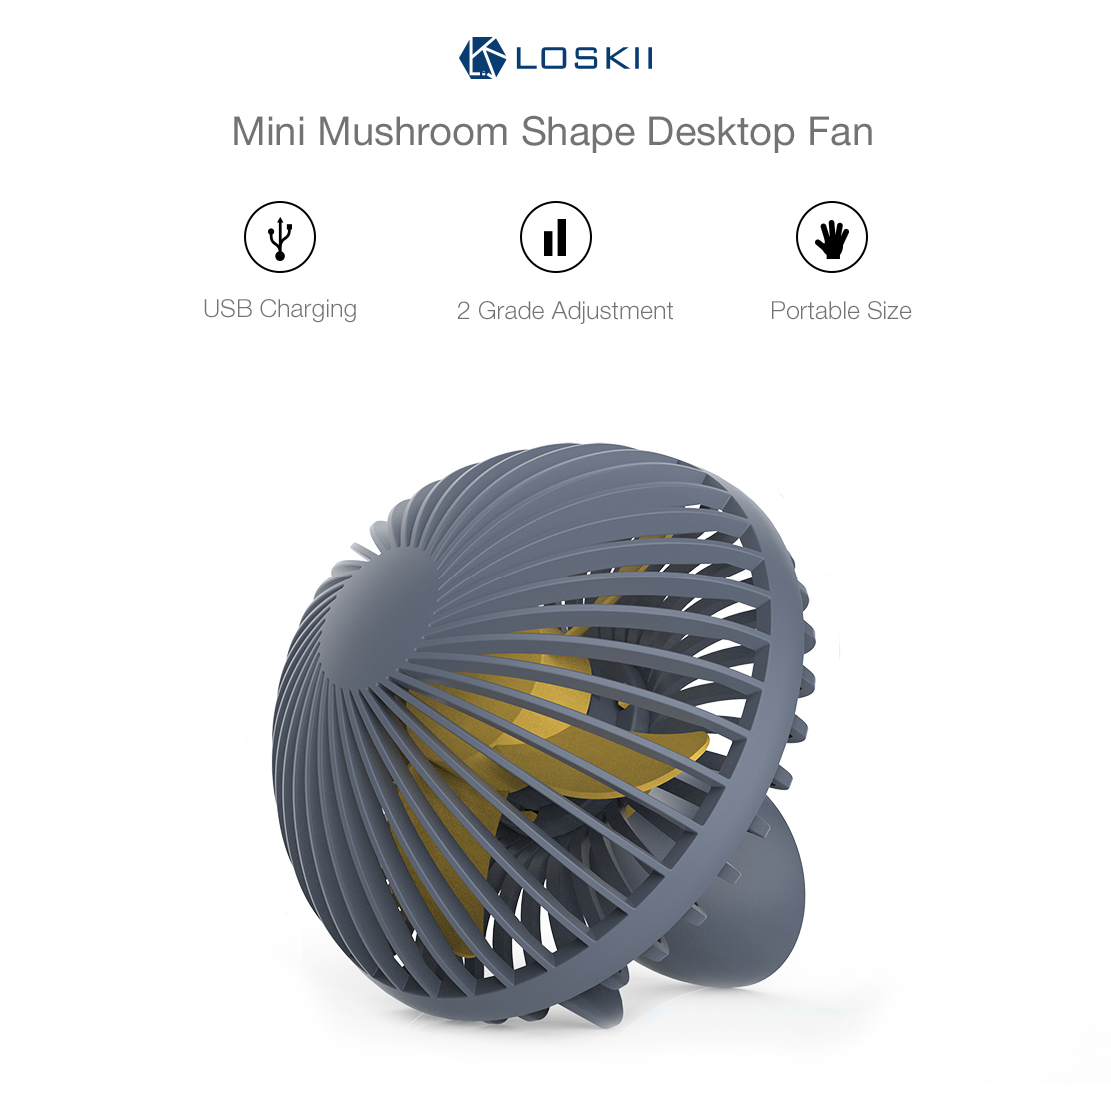 Loskii HF-200 Portable Mini Electronic Desktop Mushroom Shape Summer Cooling Fan 2 Grade Adjustment USB Charging Fan 64